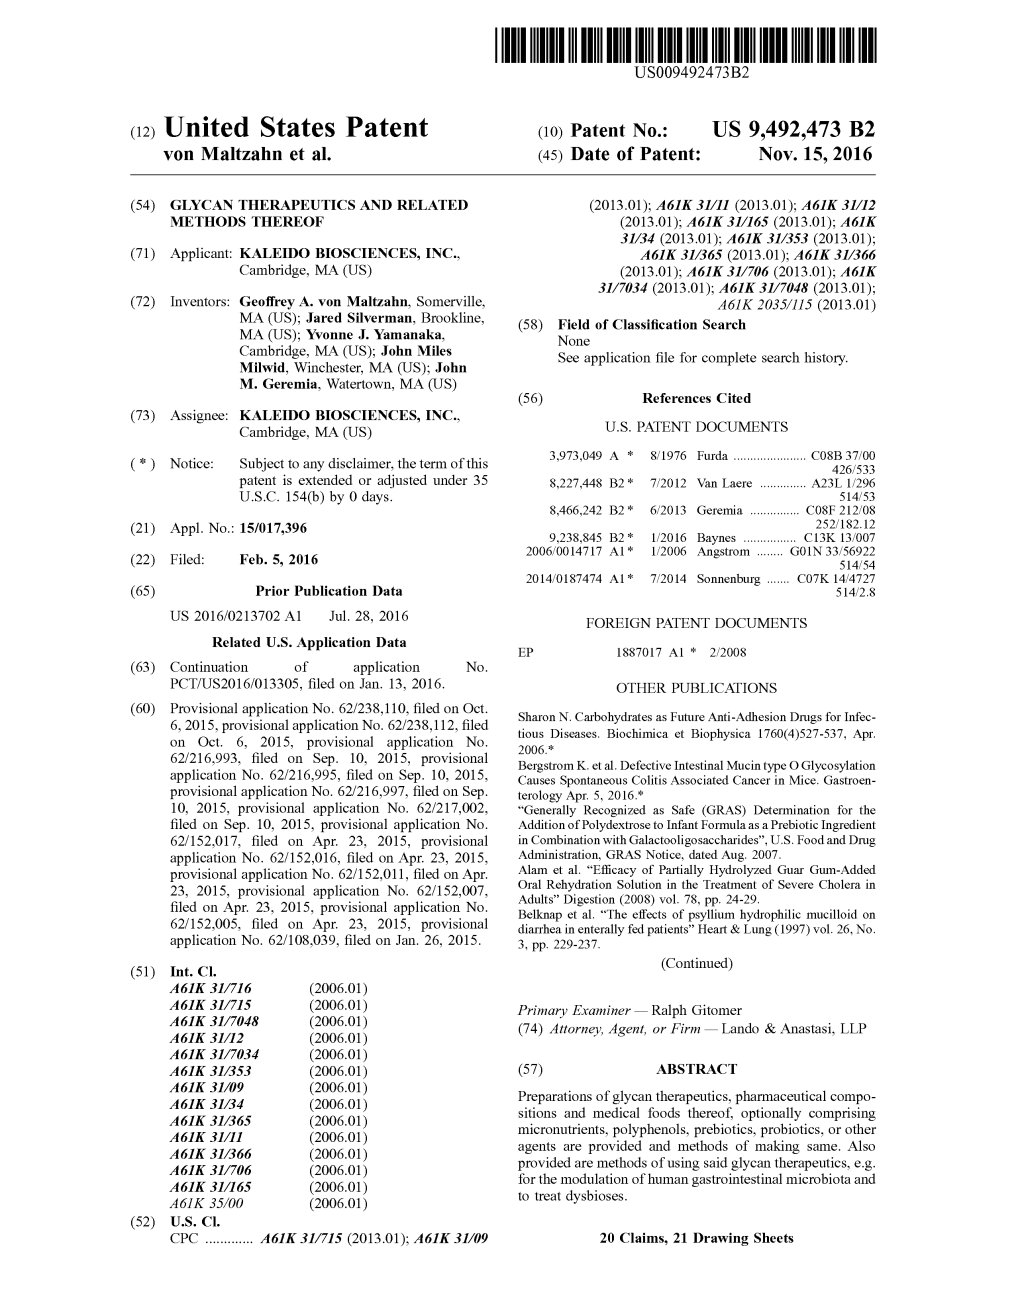 (12) United States Patent (10) Patent No.: US 9,492.473 B2 Von Maltzahn Et Al